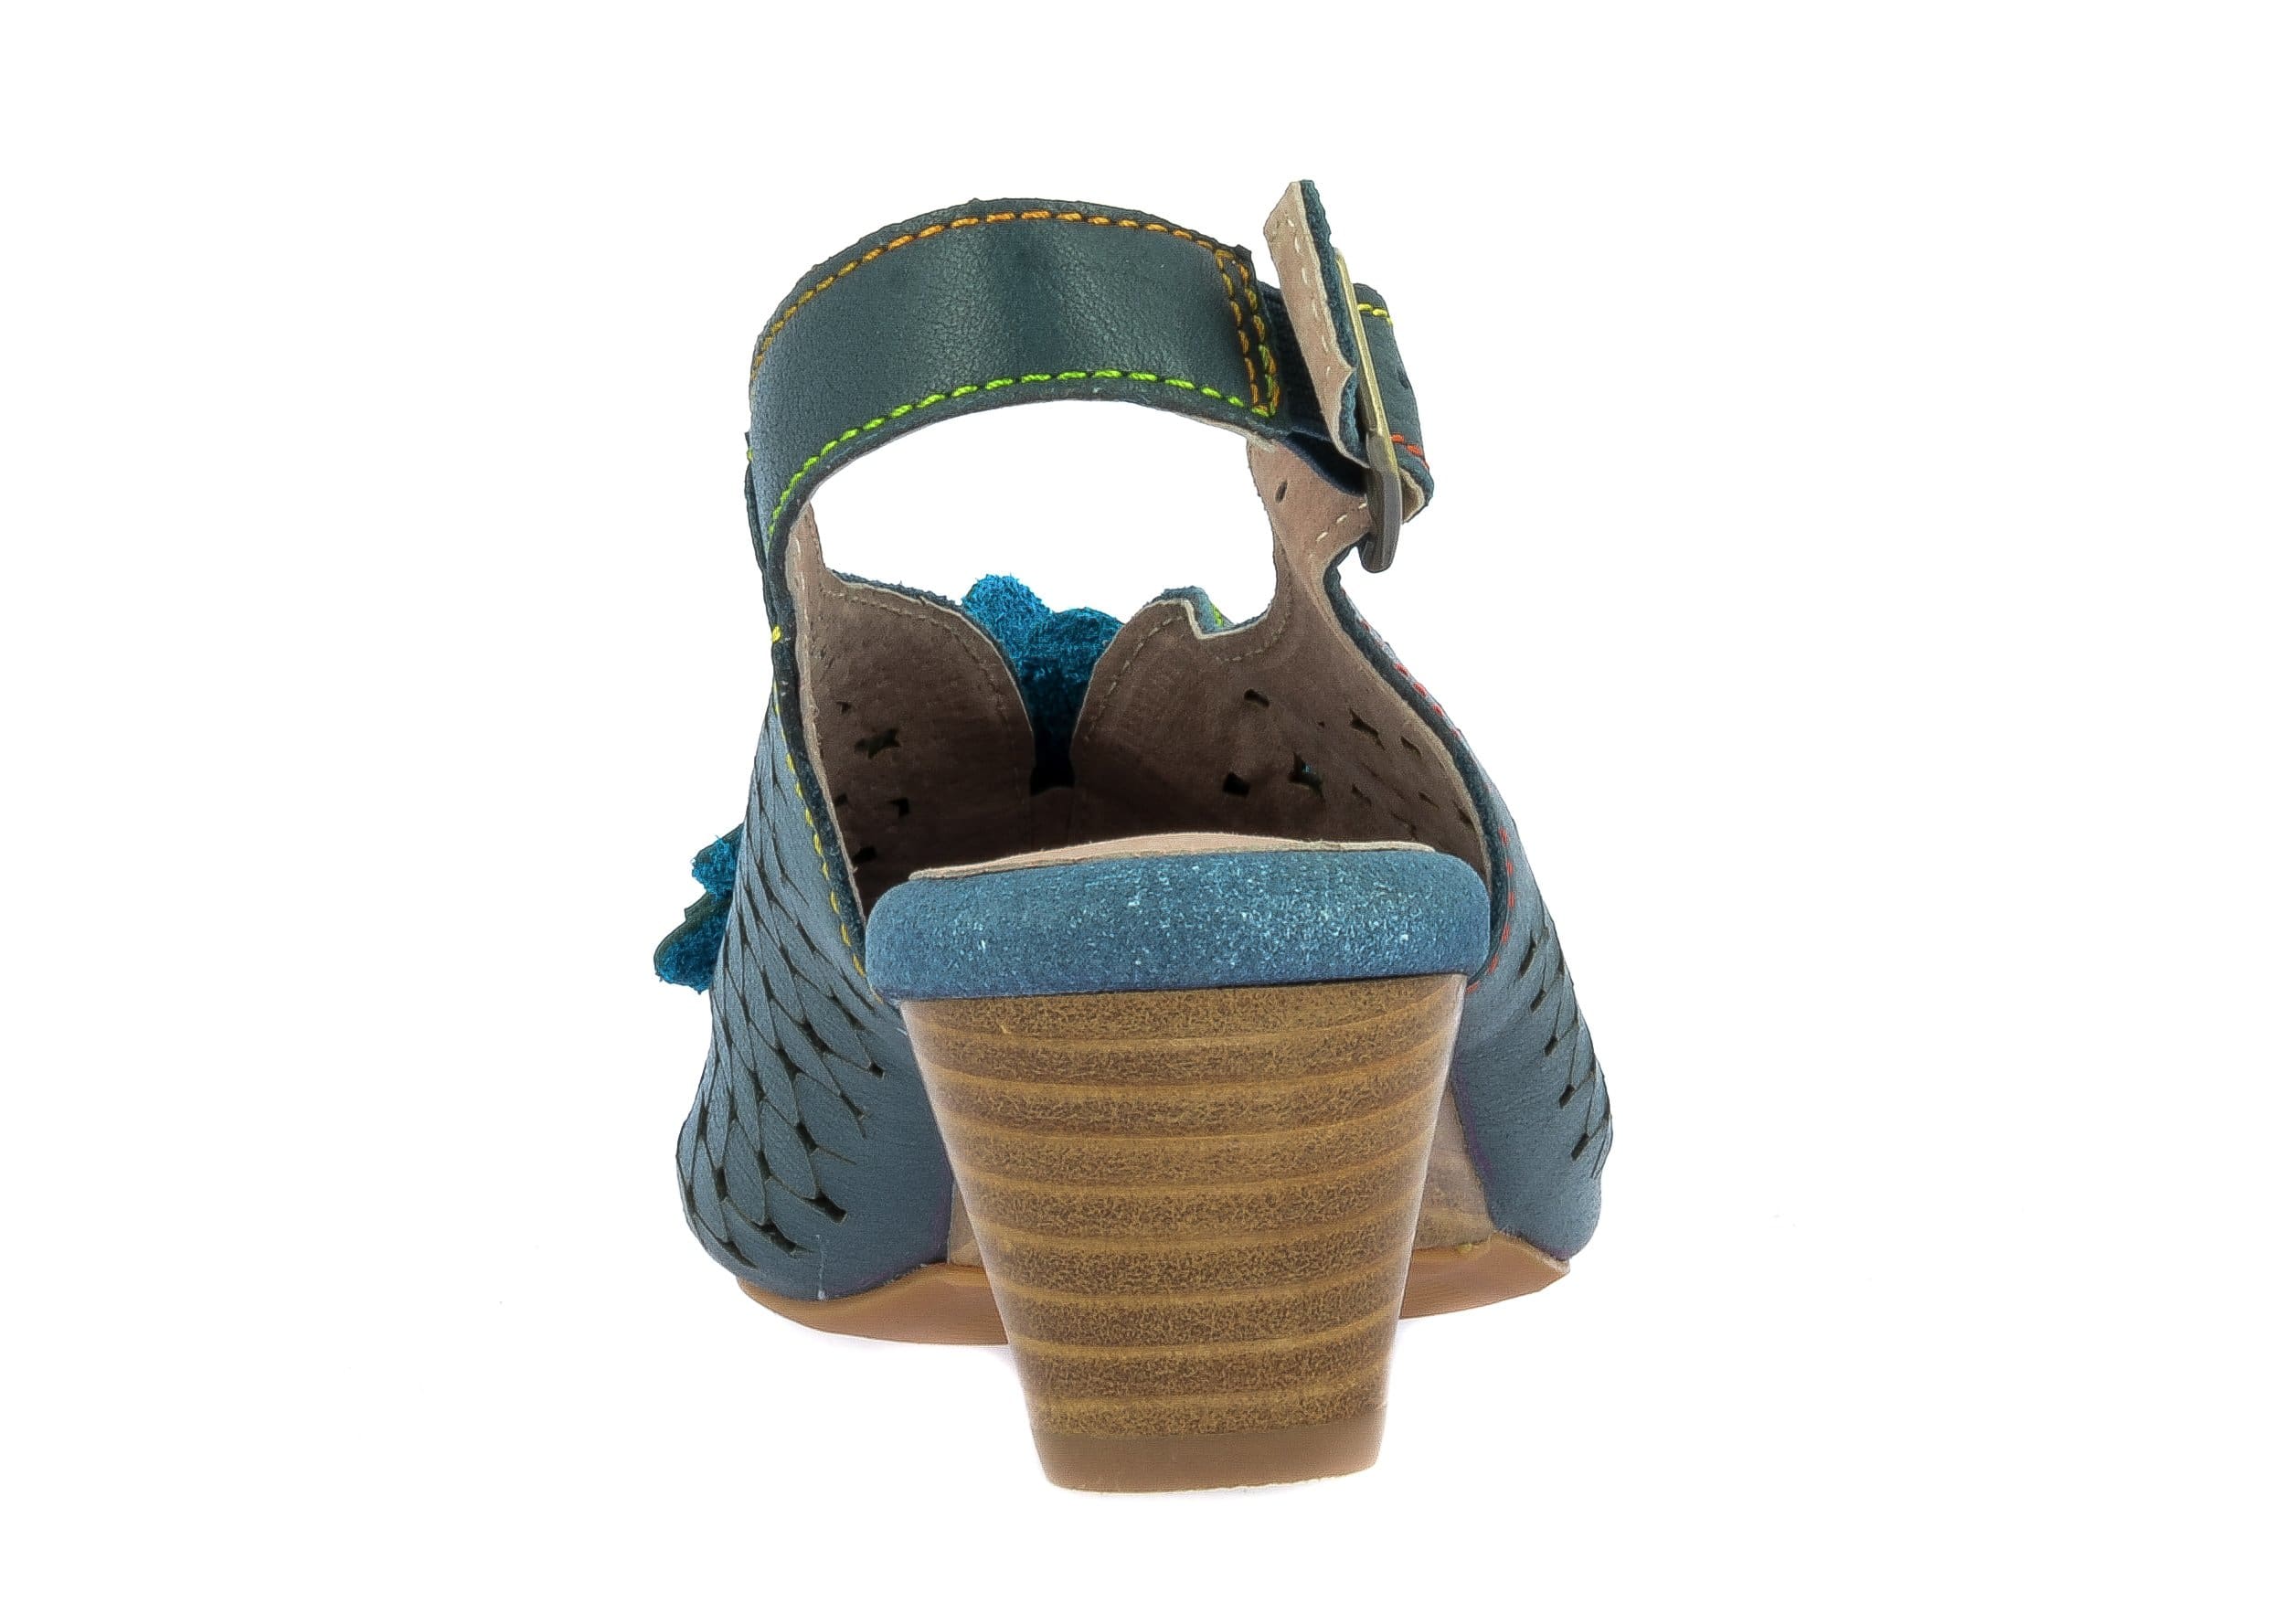 Schuh FACRIO02 - Sandale